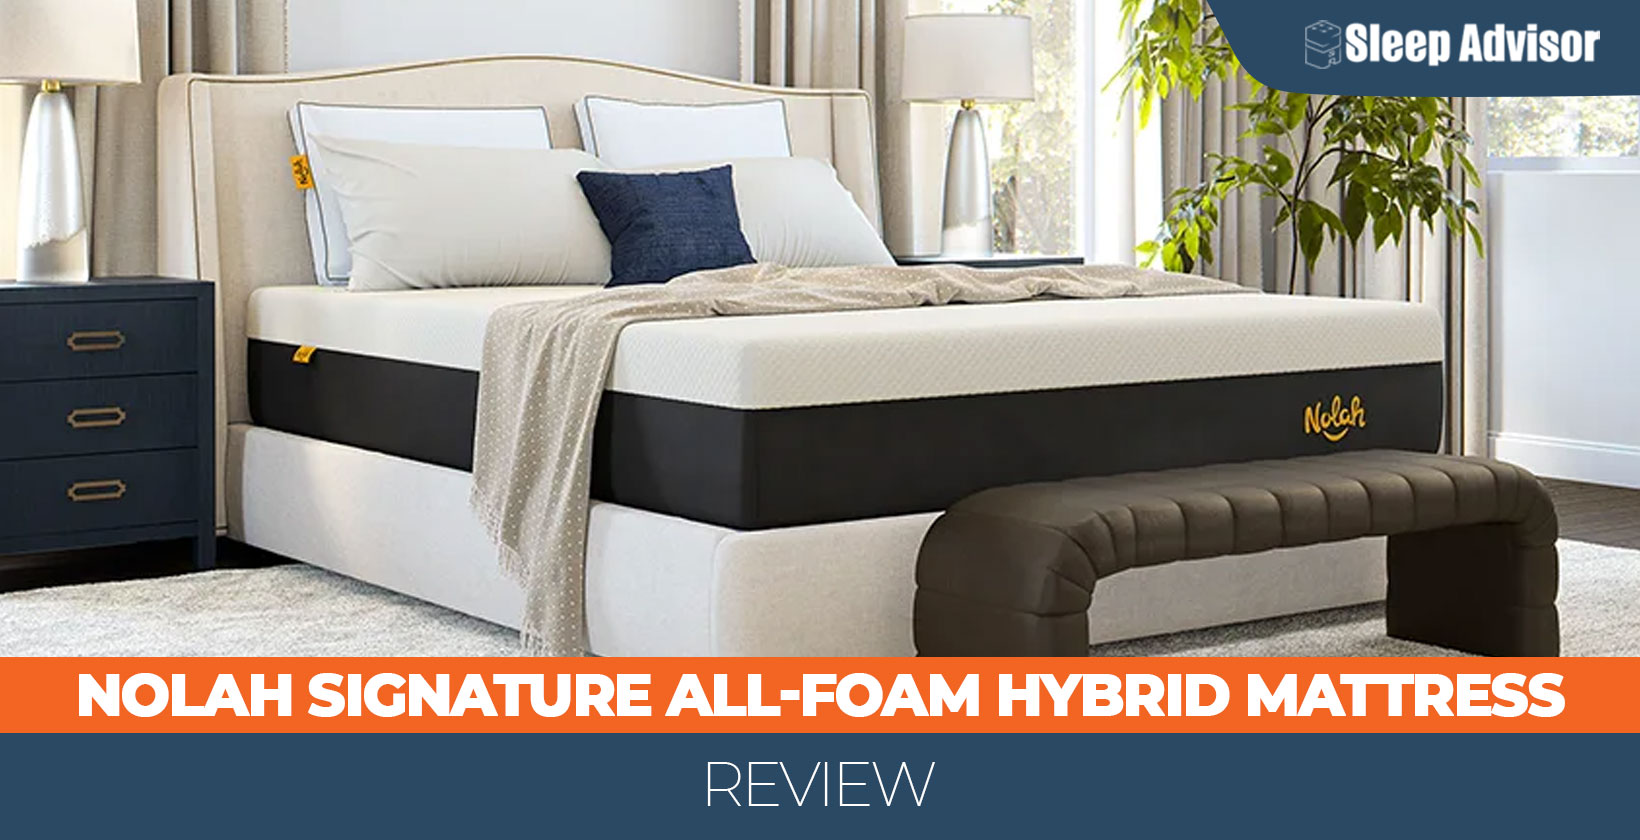 Nolah Signature All-Foam Hybrid Mattress Review